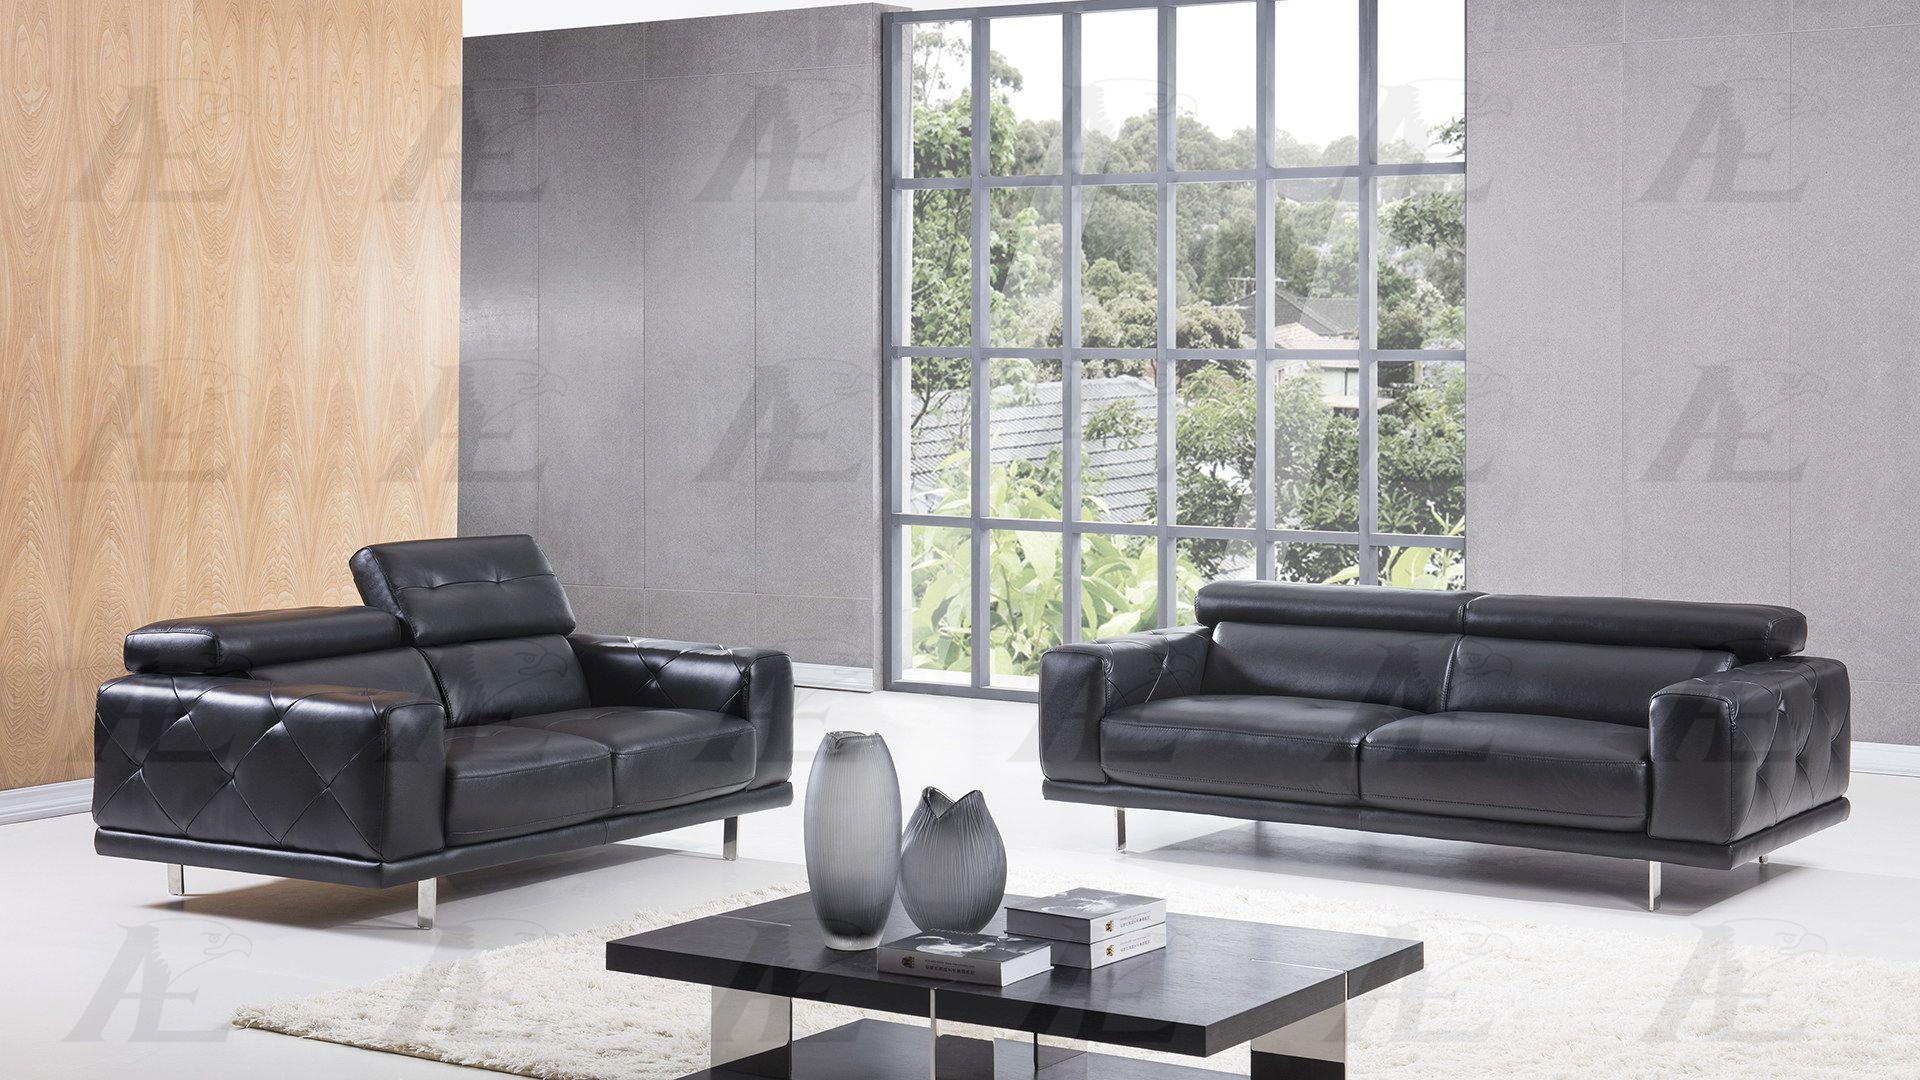 

    
American Eagle Furniture EK039-BK Black Tufted Sofa Italian Leather
